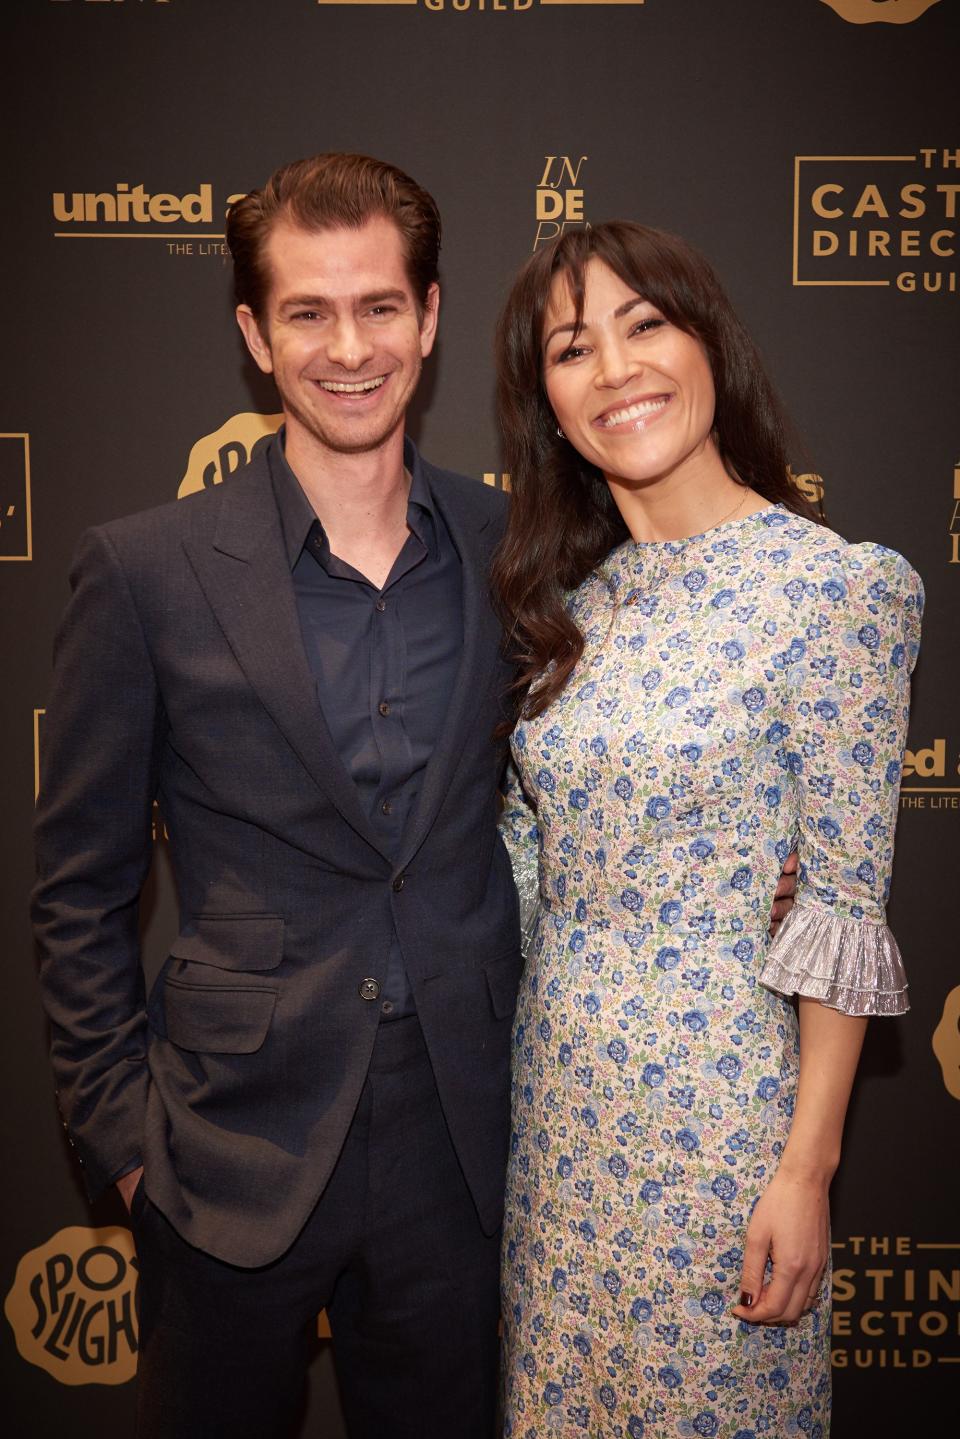 Andrew Garfield & Eleanor Matsuura attend the Casting Awards 2019 at the Ham Yard Hotel